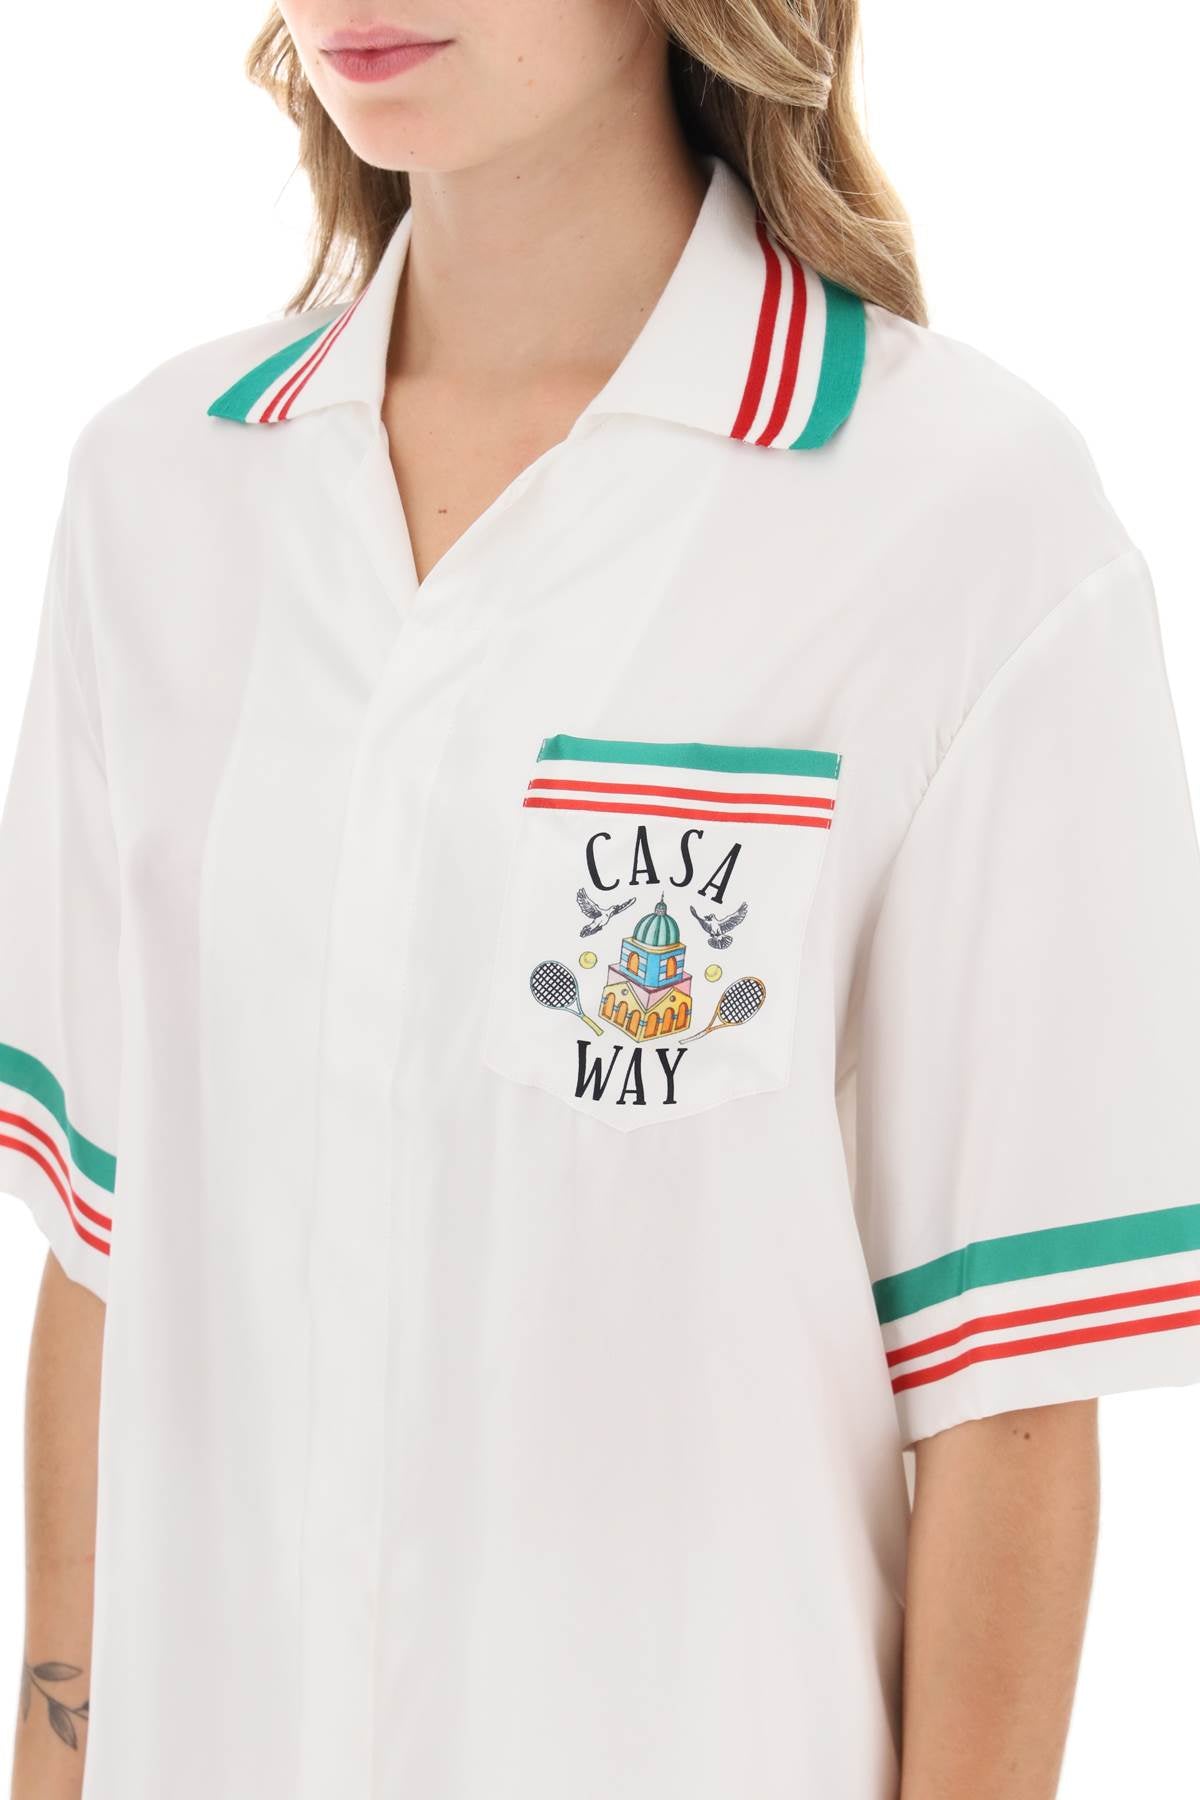 Casablanca Casa Way Silk Bowling Shirt-Casablanca-M-Urbanheer